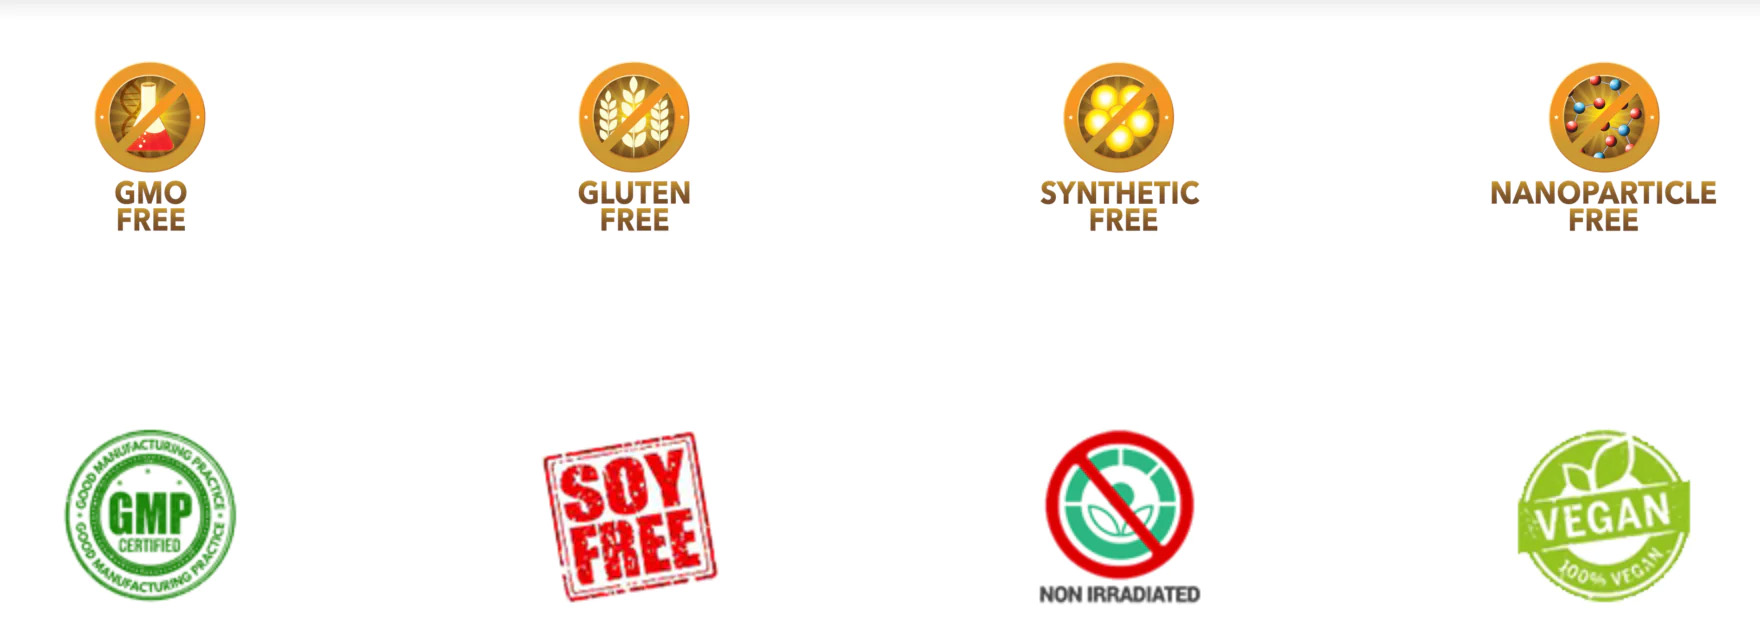 GMO Free Gluten Free Vegan